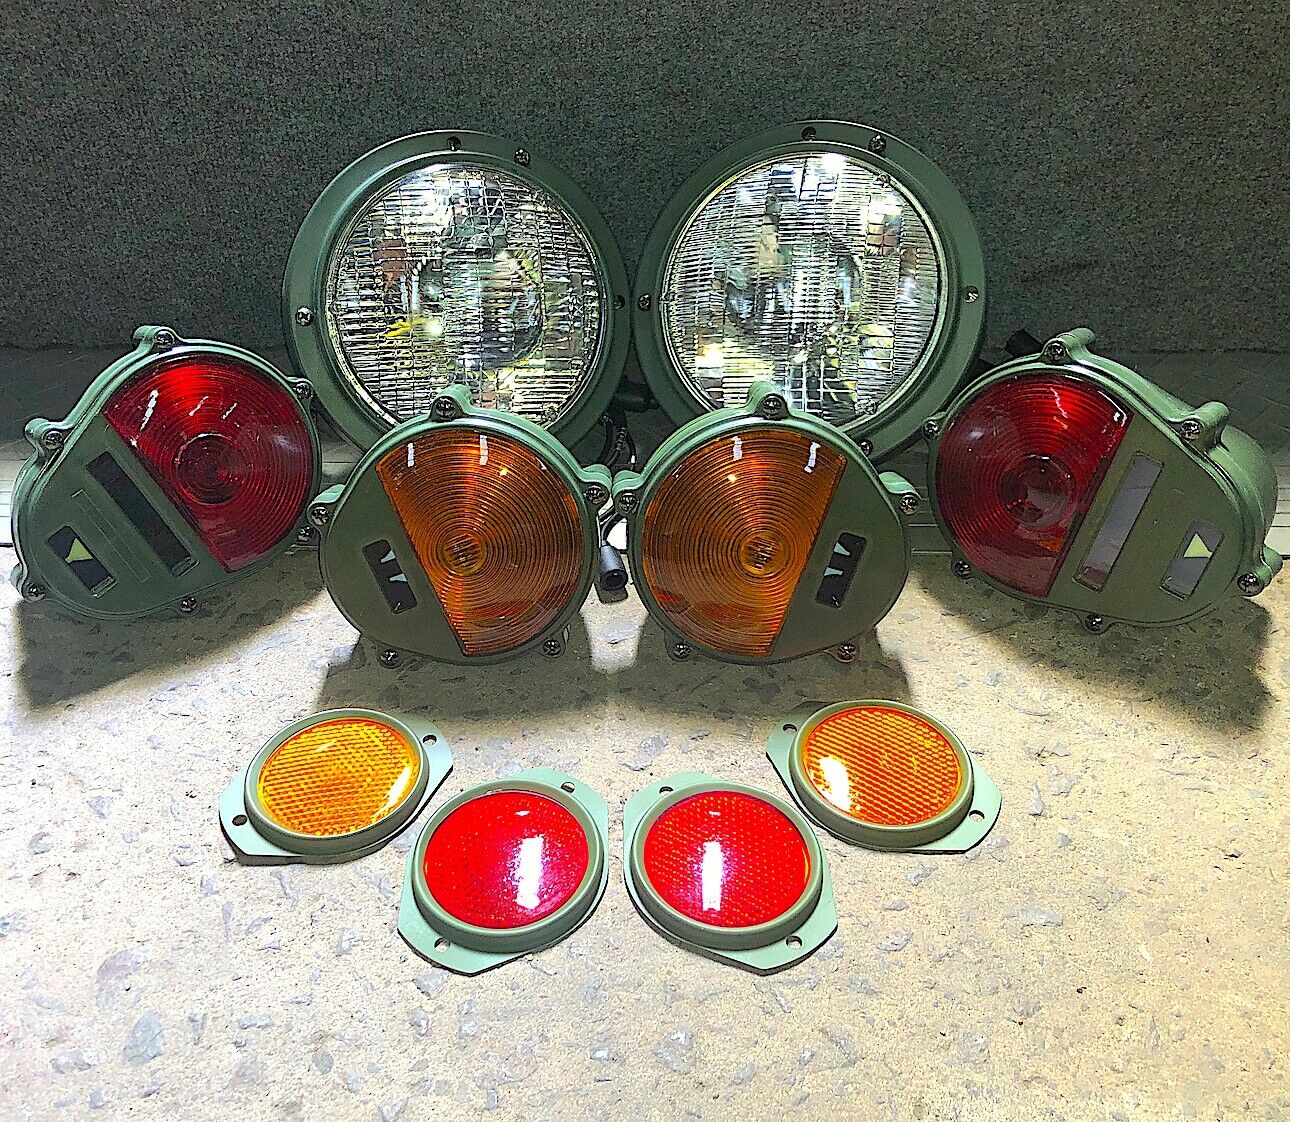 Set of Headlight Asm., Taillights, Parking Lights, & Reflectors  M939  M35  M998